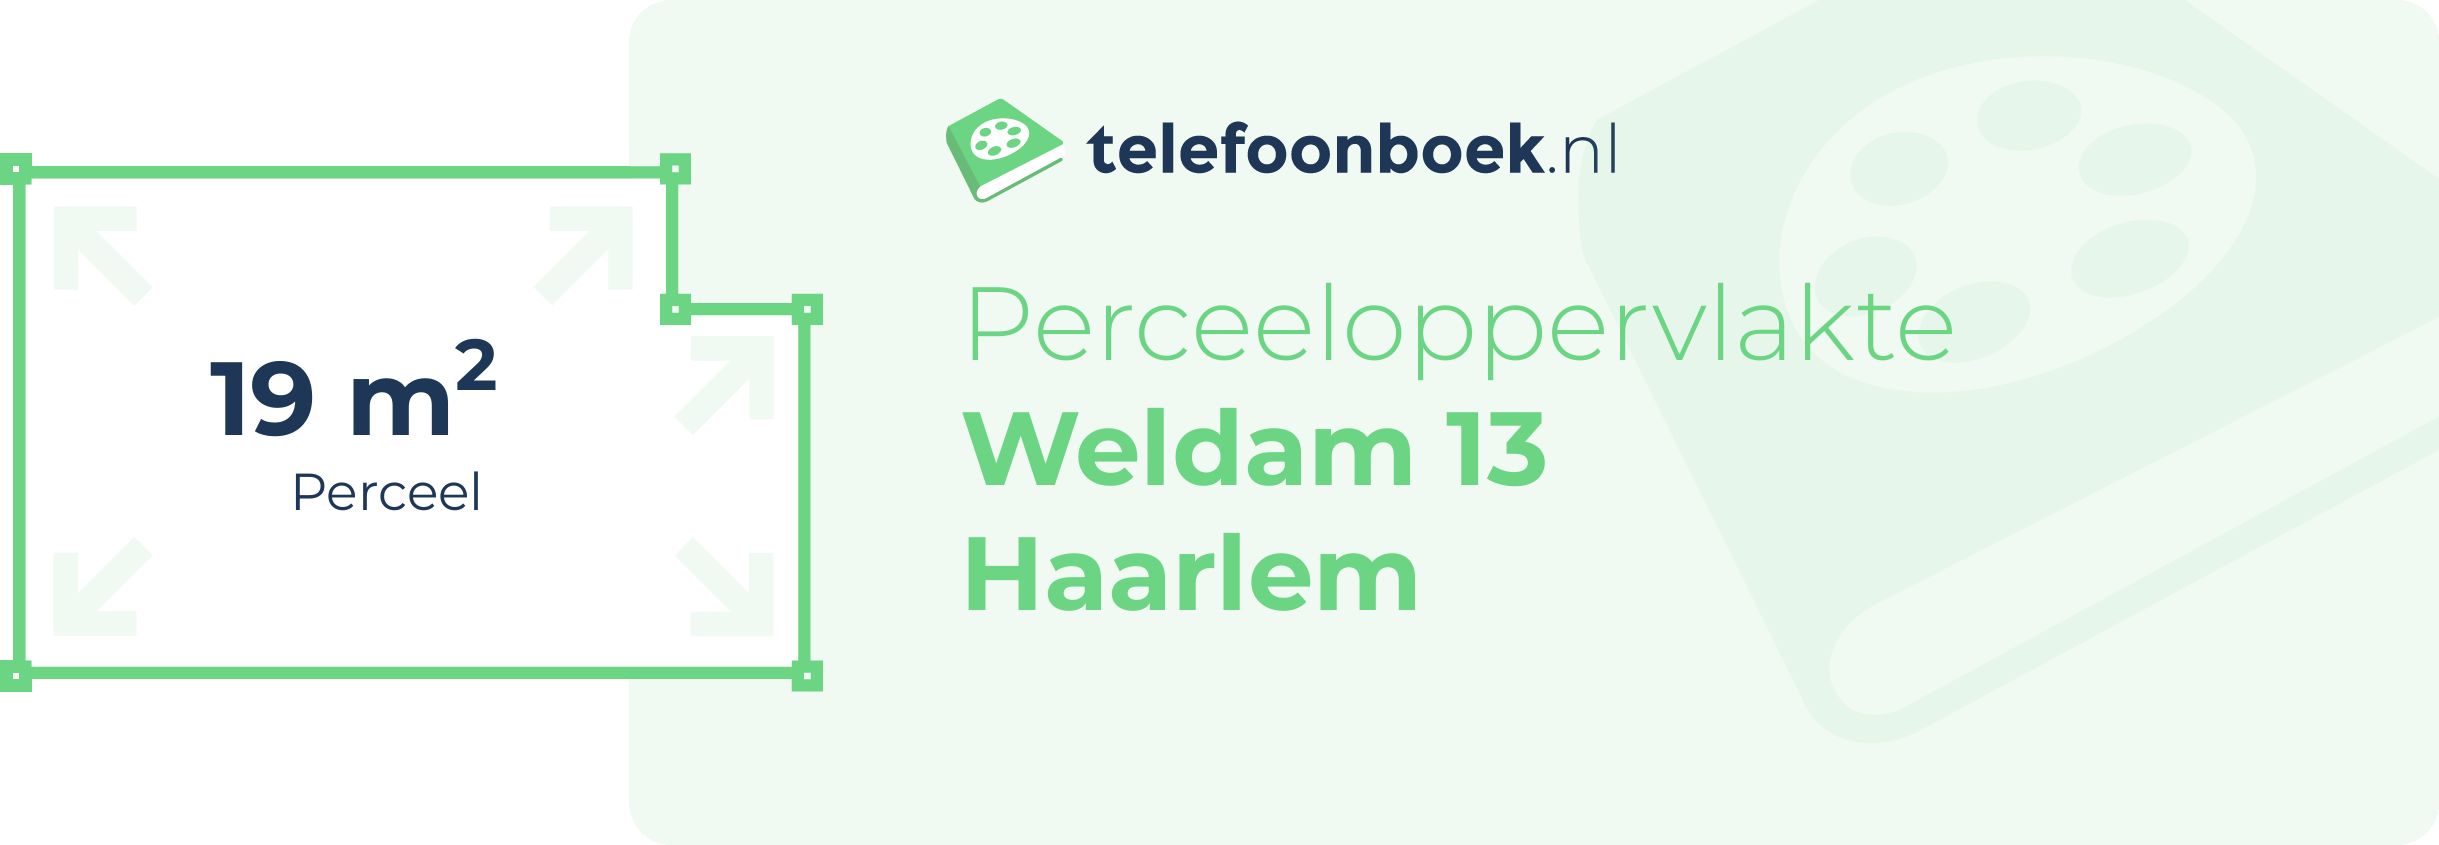 Perceeloppervlakte Weldam 13 Haarlem